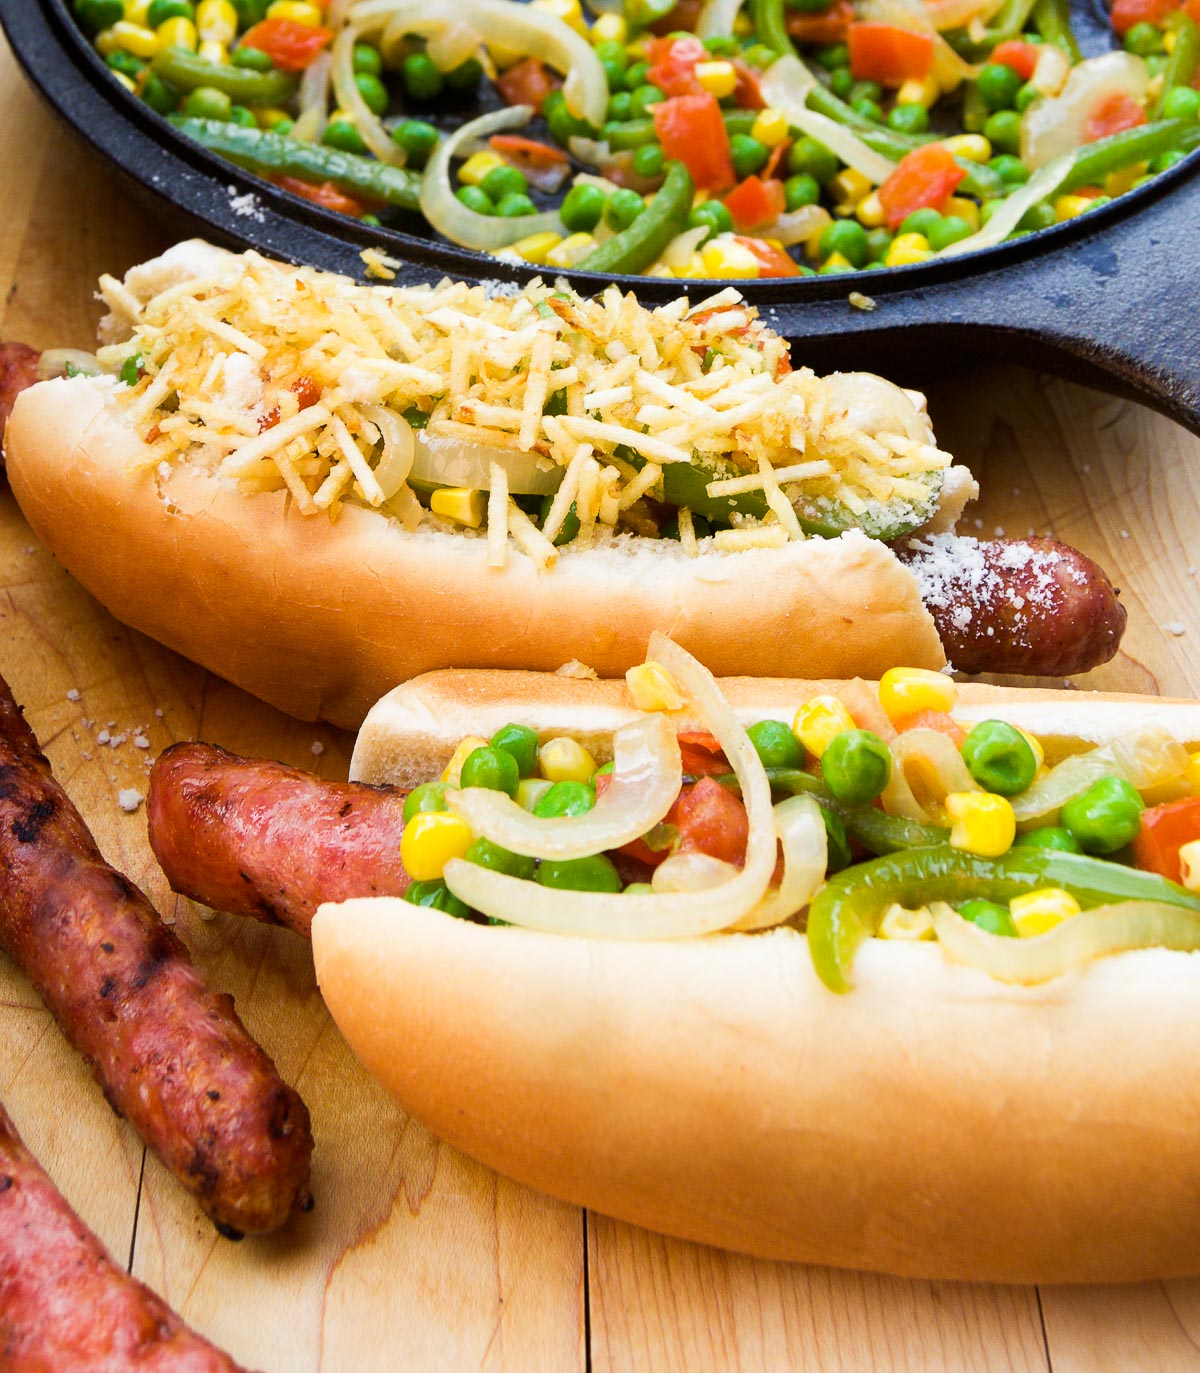 Brazilian Hot Dog (Cachorro Quente) - BarbequedChicken